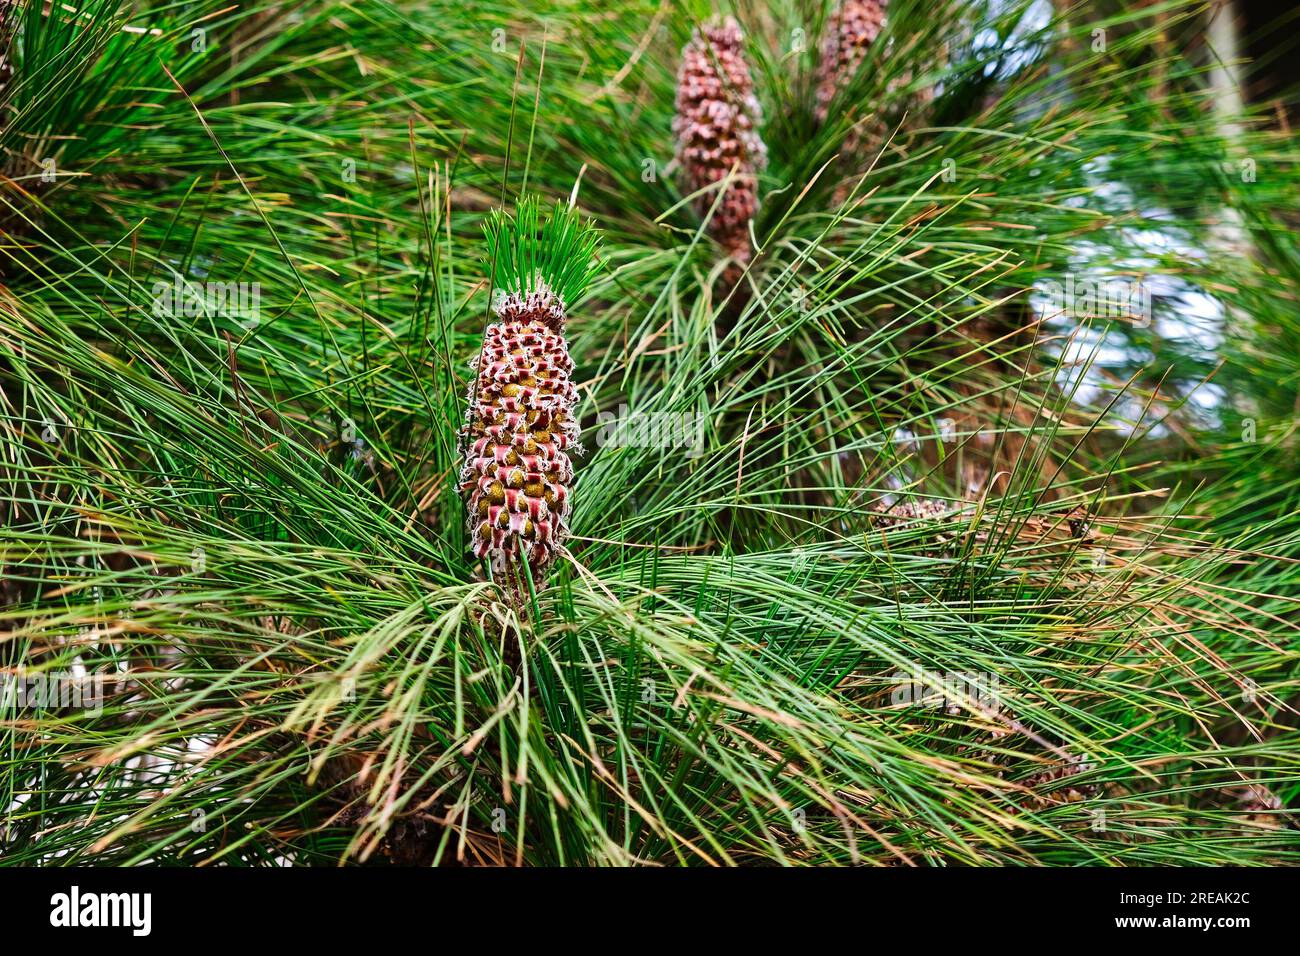 Male cones and needles of chir pine tree (Pinus roxburghii). Stock Photo